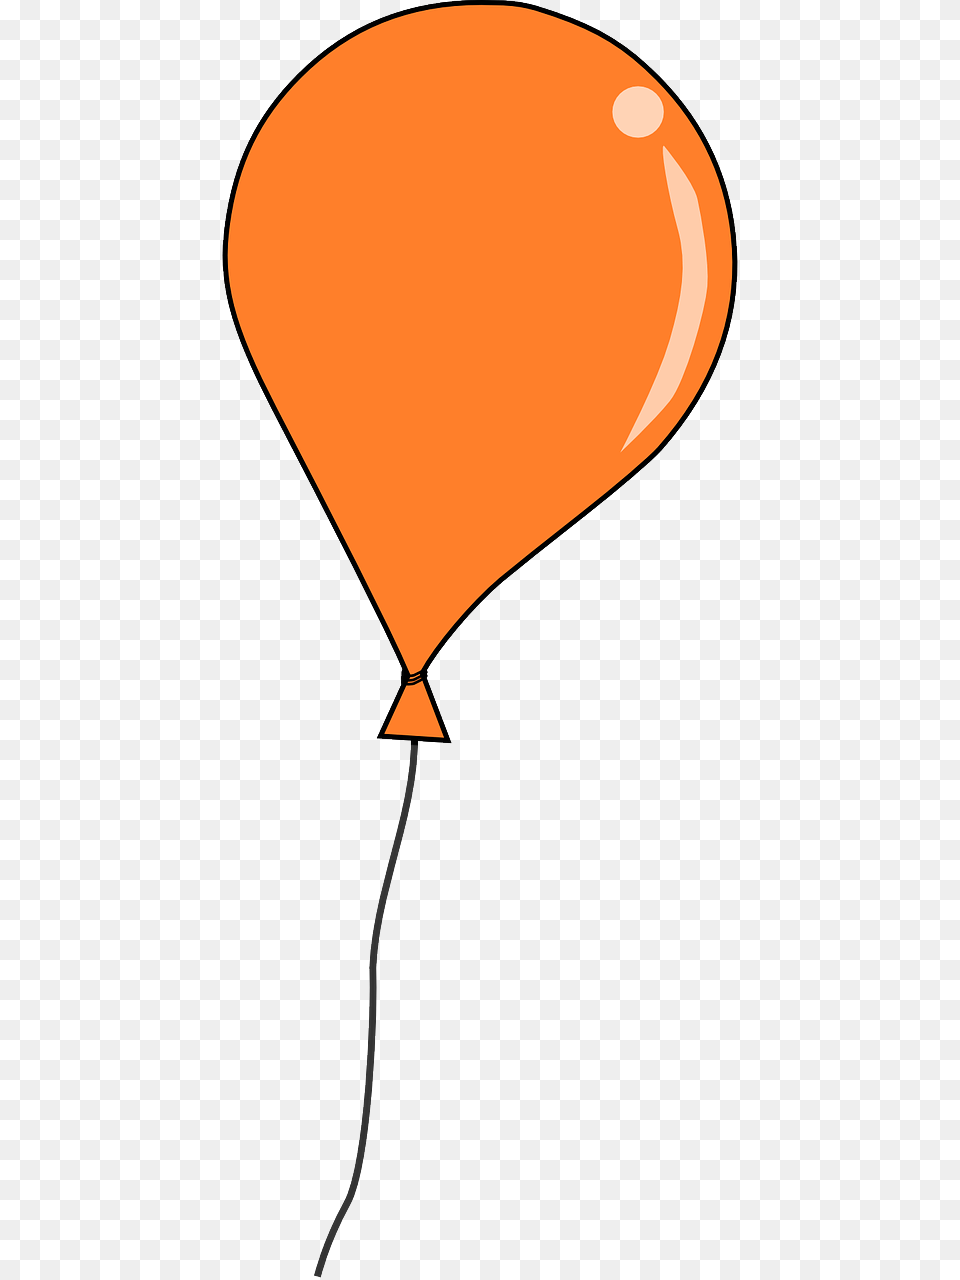 Orange Slice Clip Art, Balloon Png